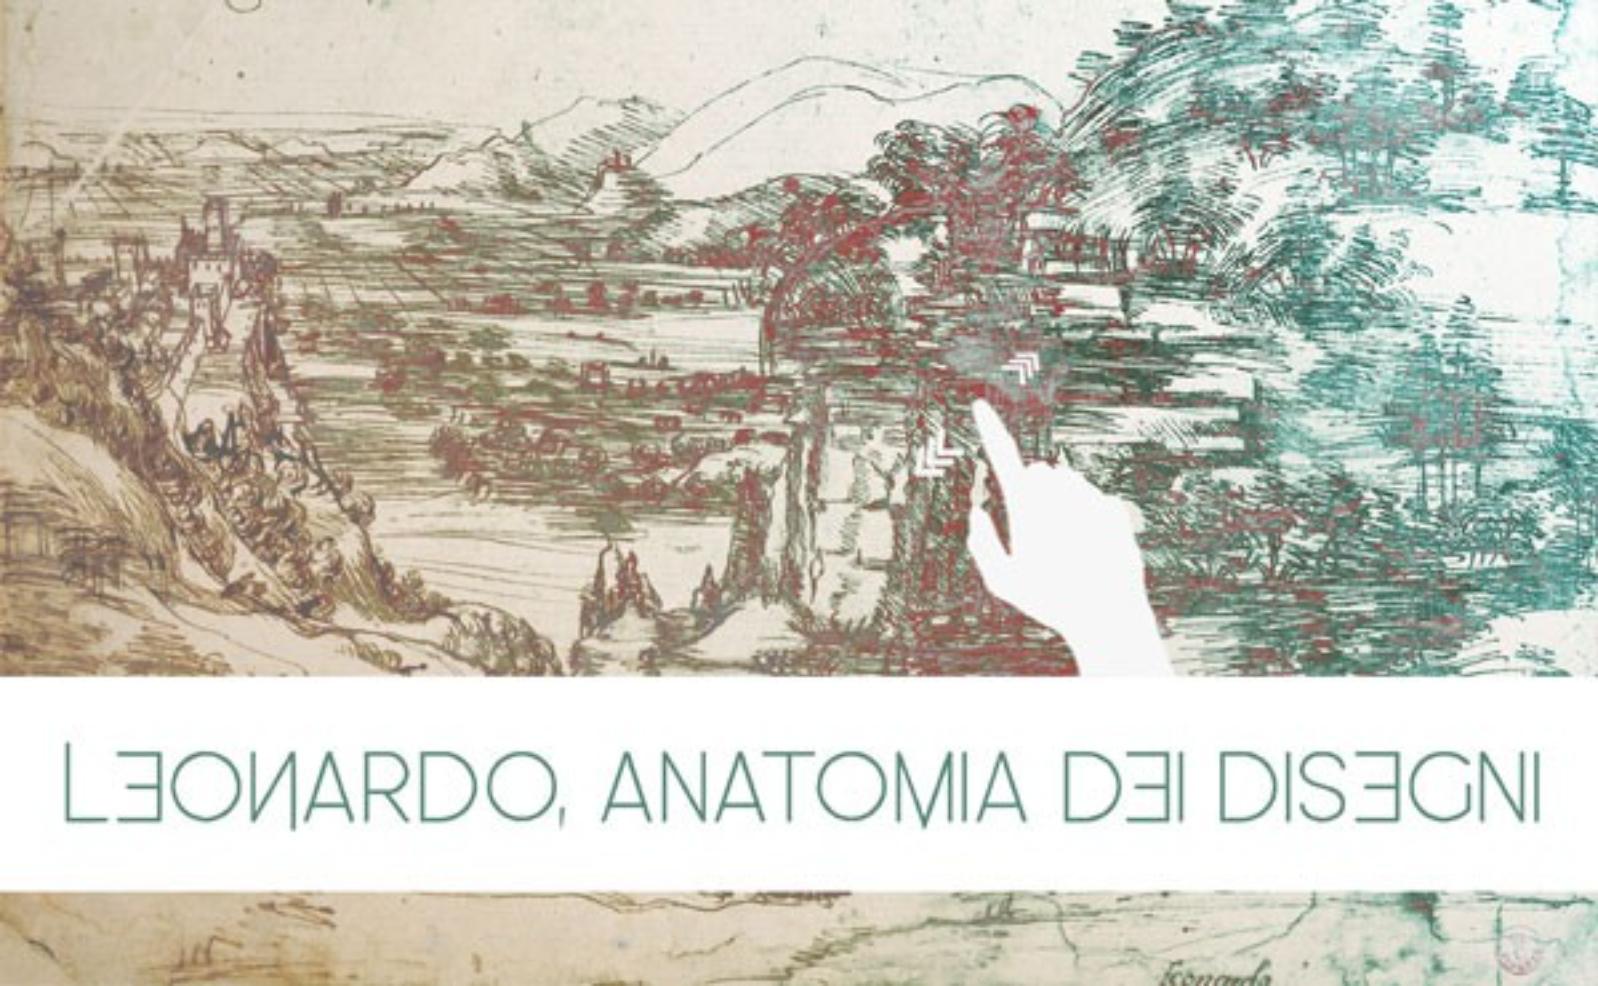 Leonardo, anatomia dei disegni